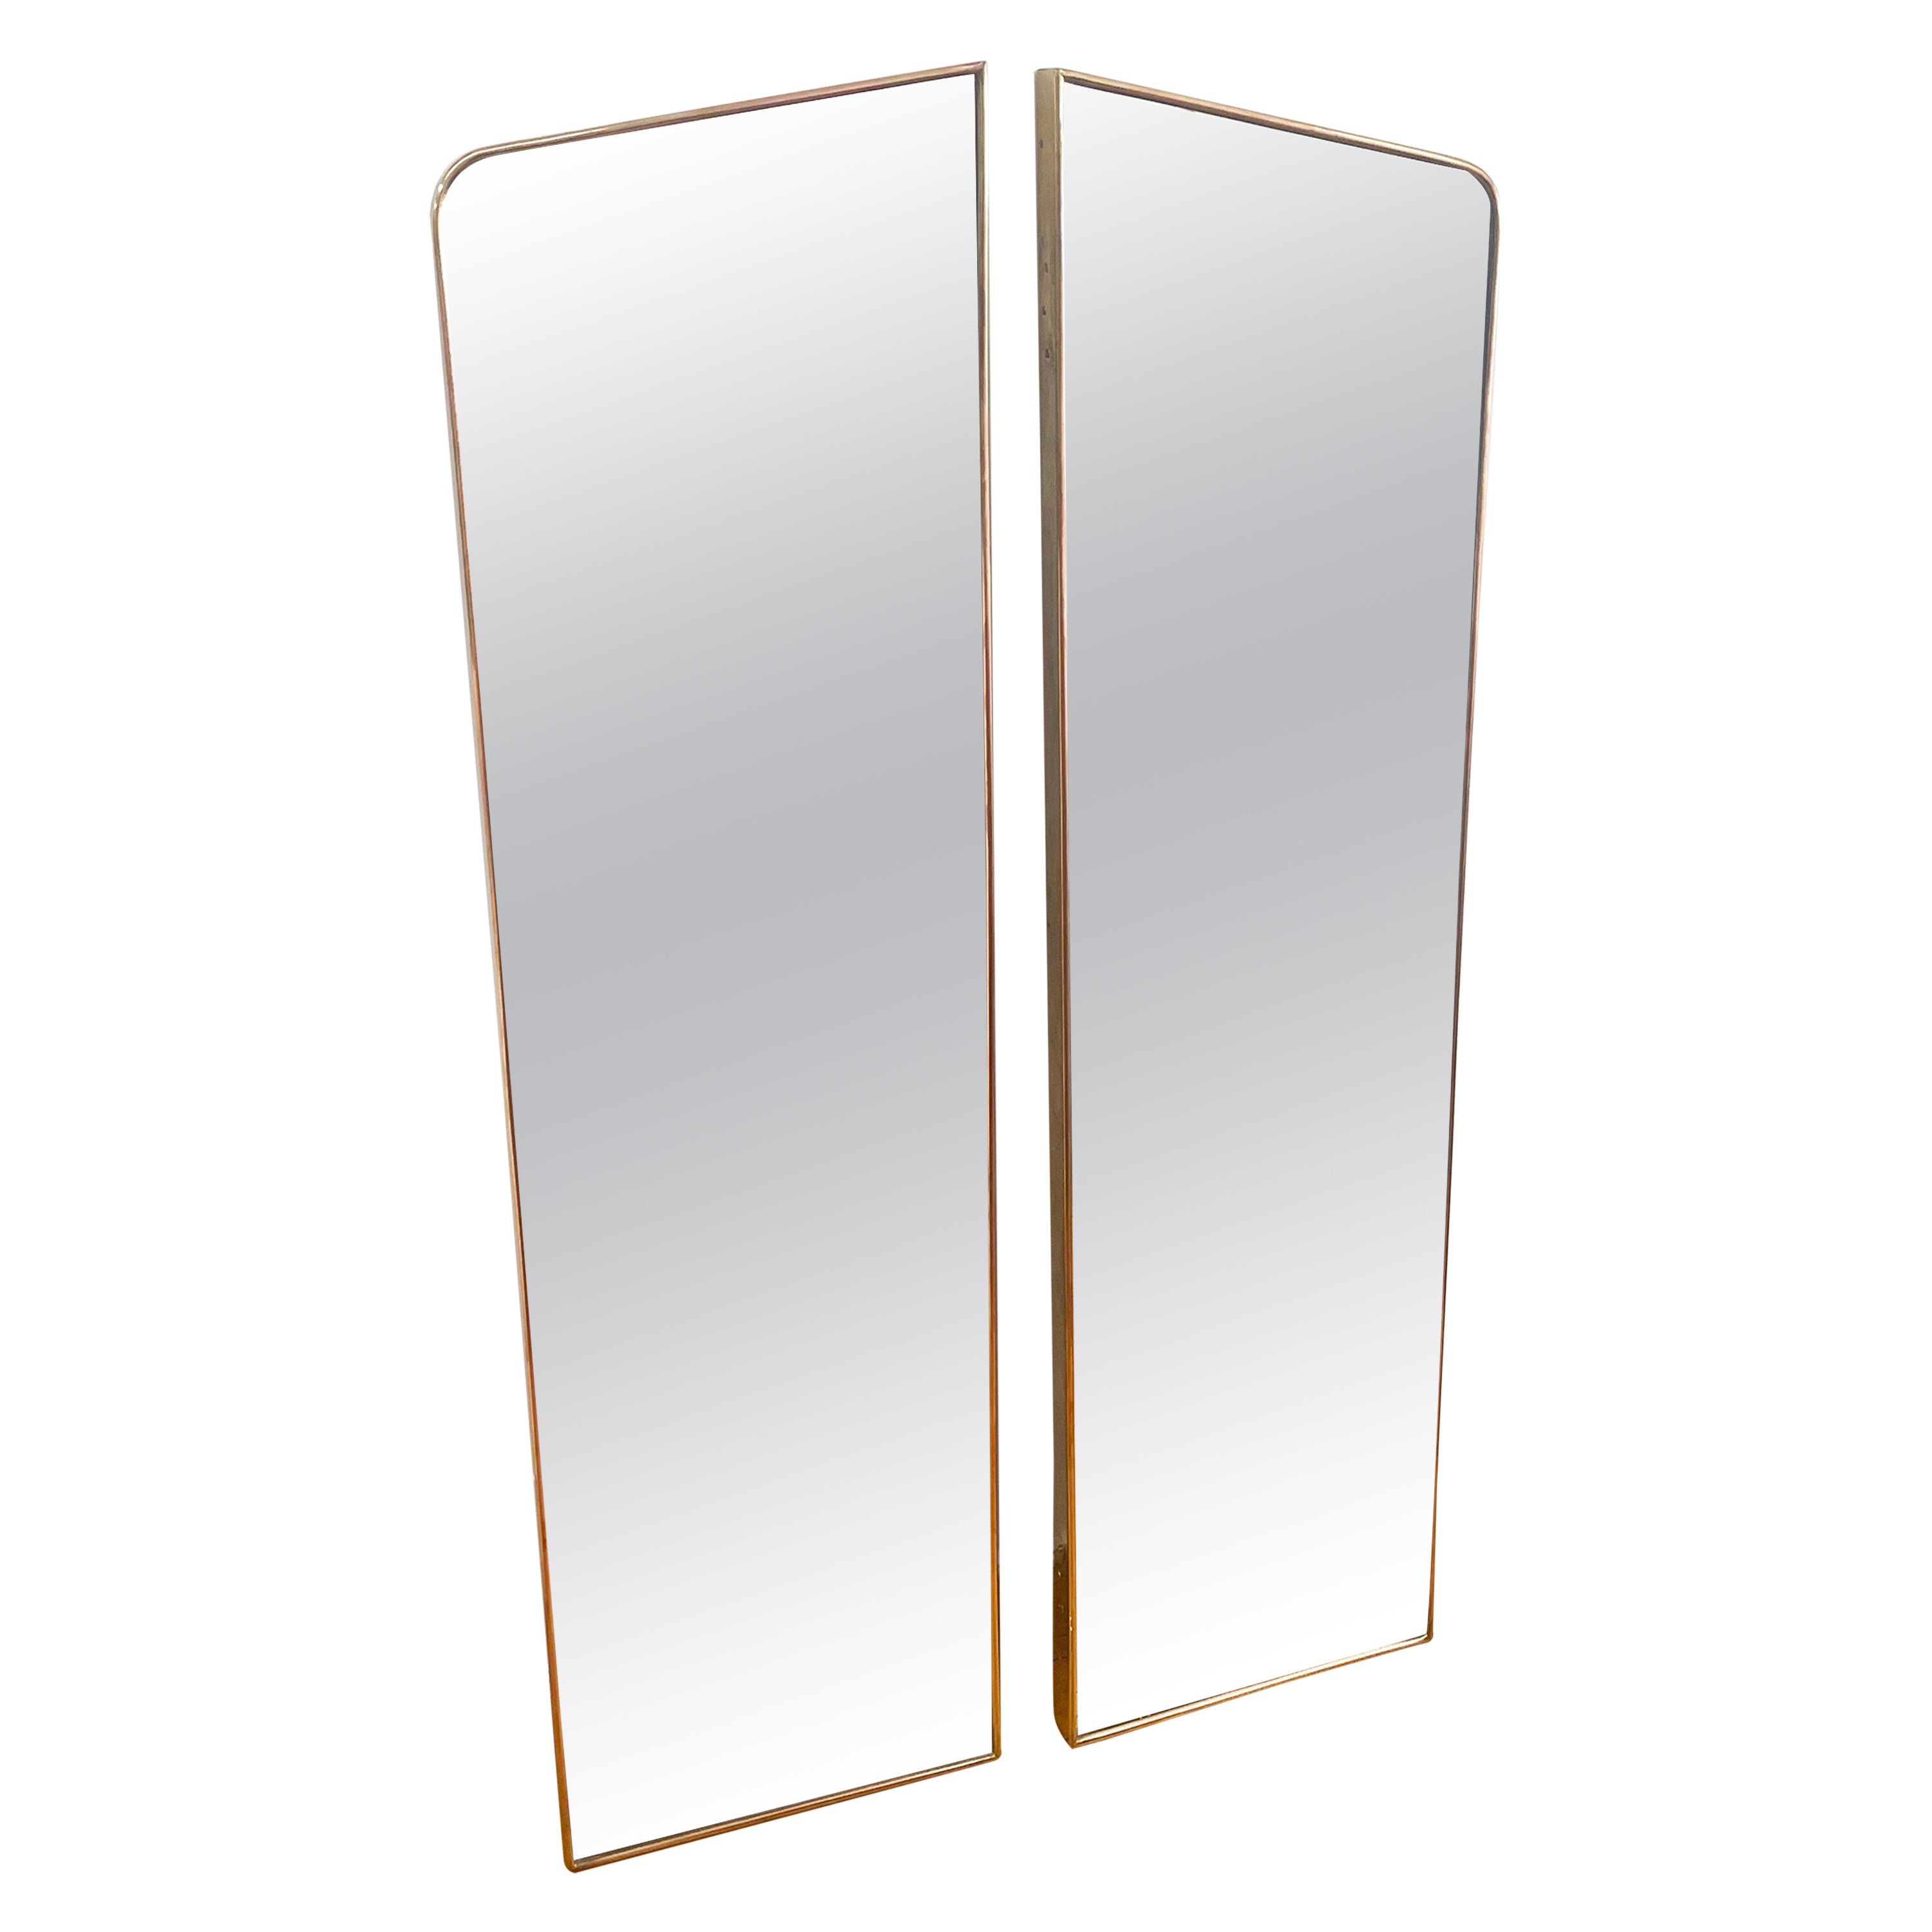 Pair of Large Italian Mid Century Brass Frame Wall Mirrors 1950s